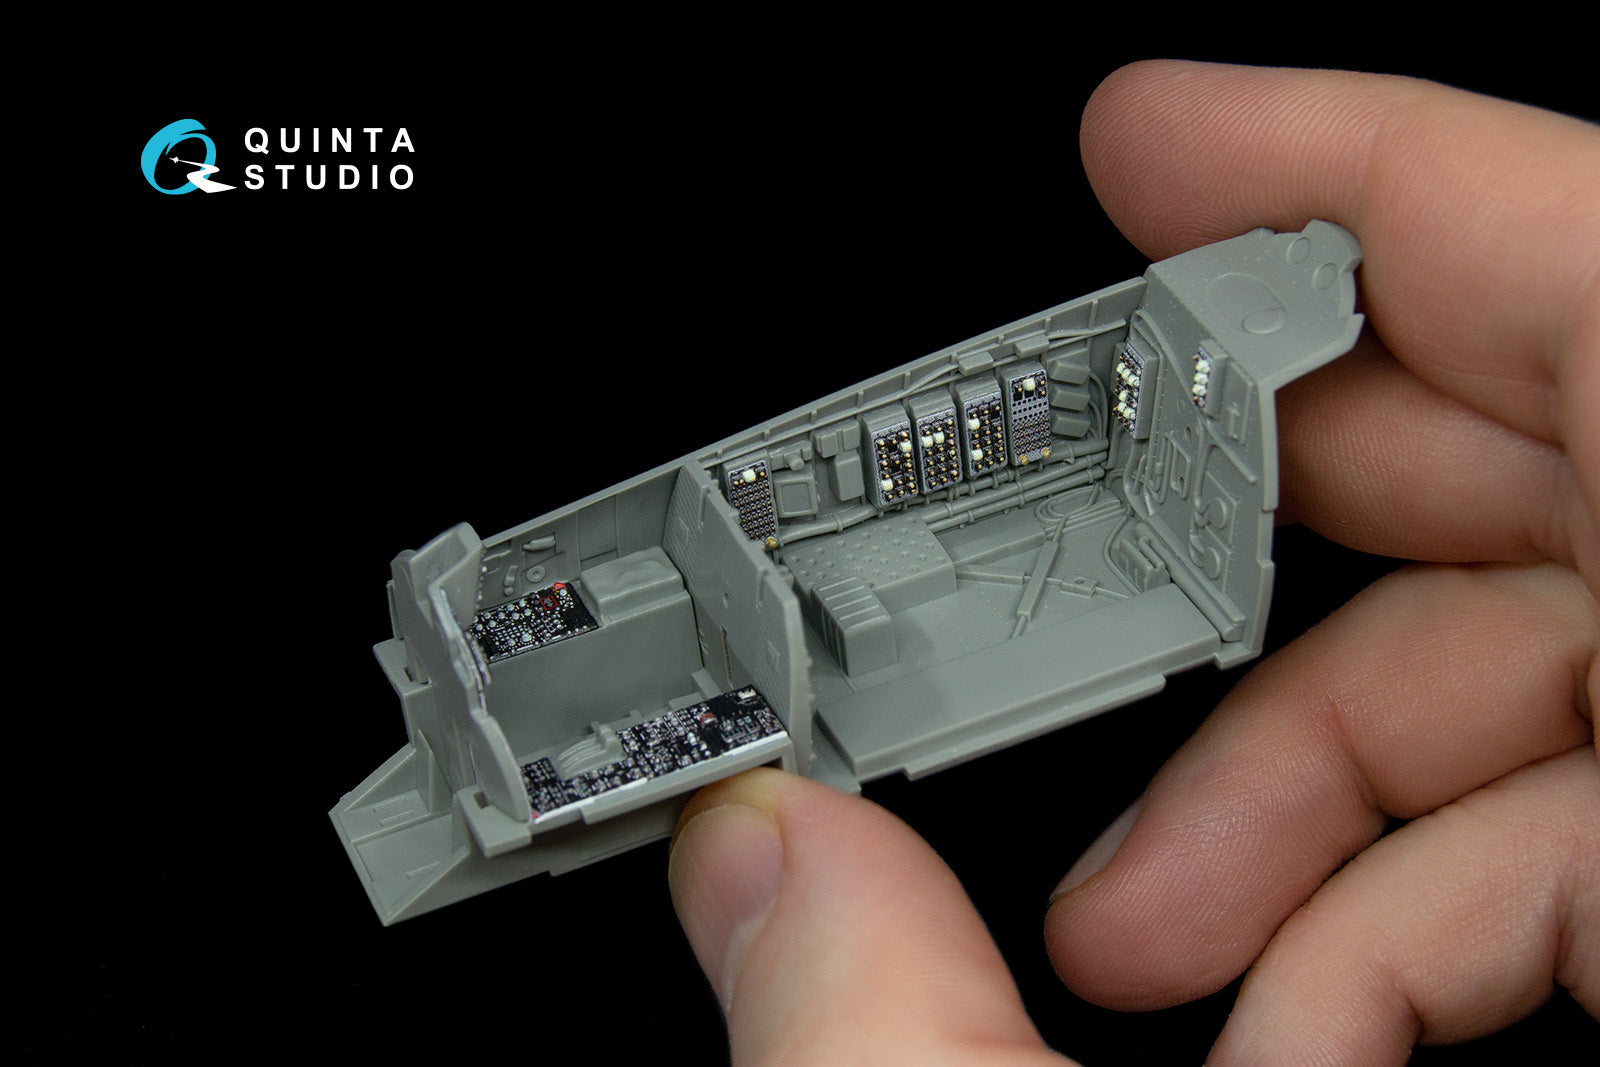 Quinta Studio - 1/48 F-15A - QD48038 for GWH kit